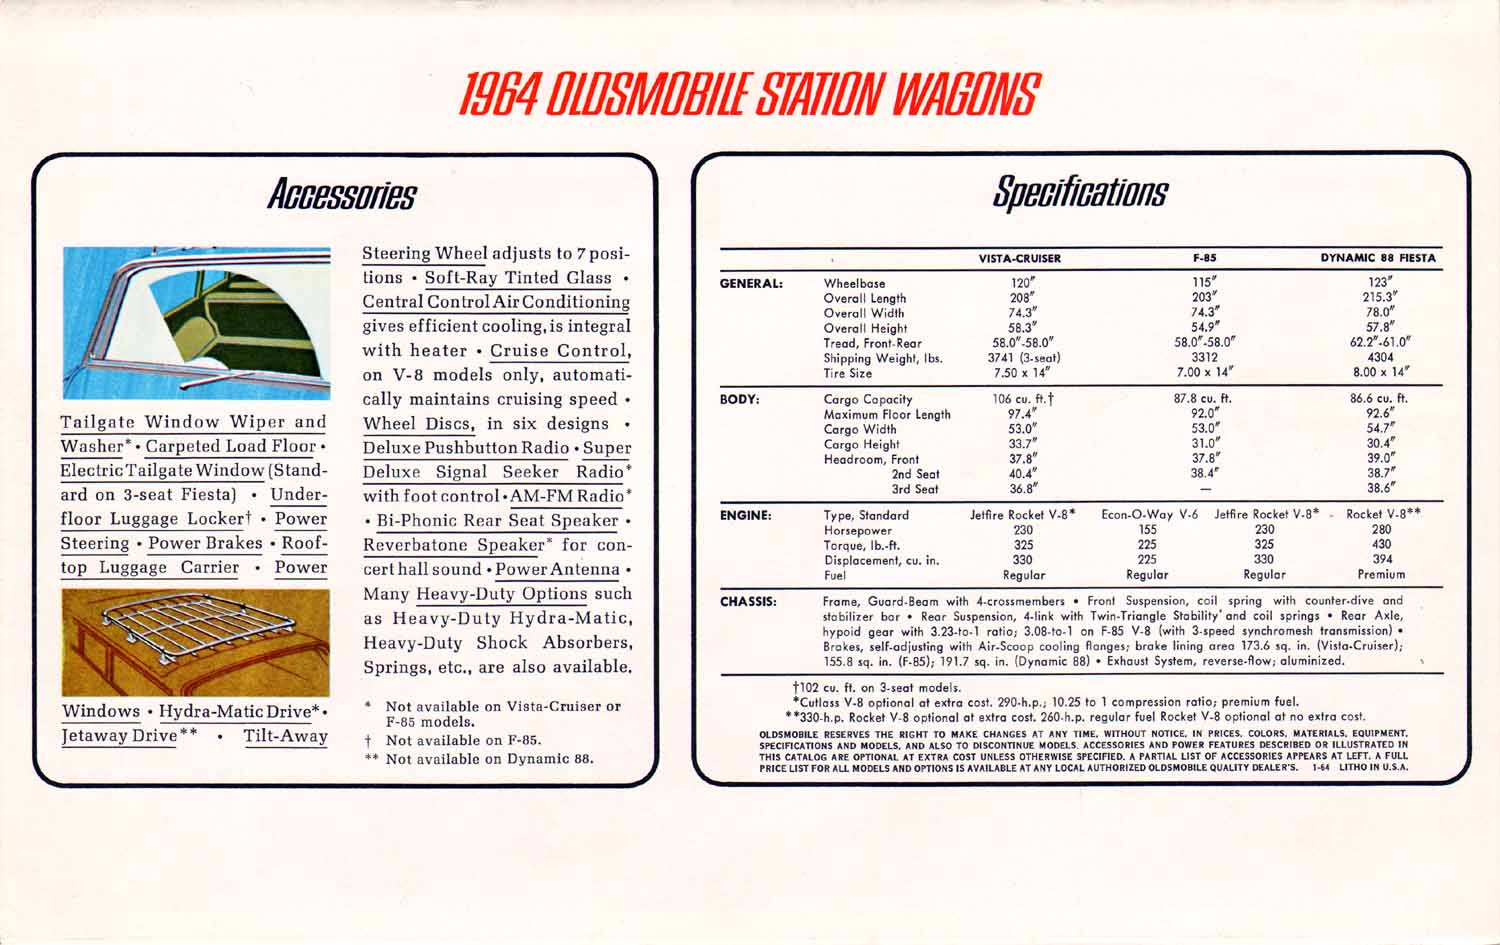 1964 Oldsmobile Wagons Folder Page 5